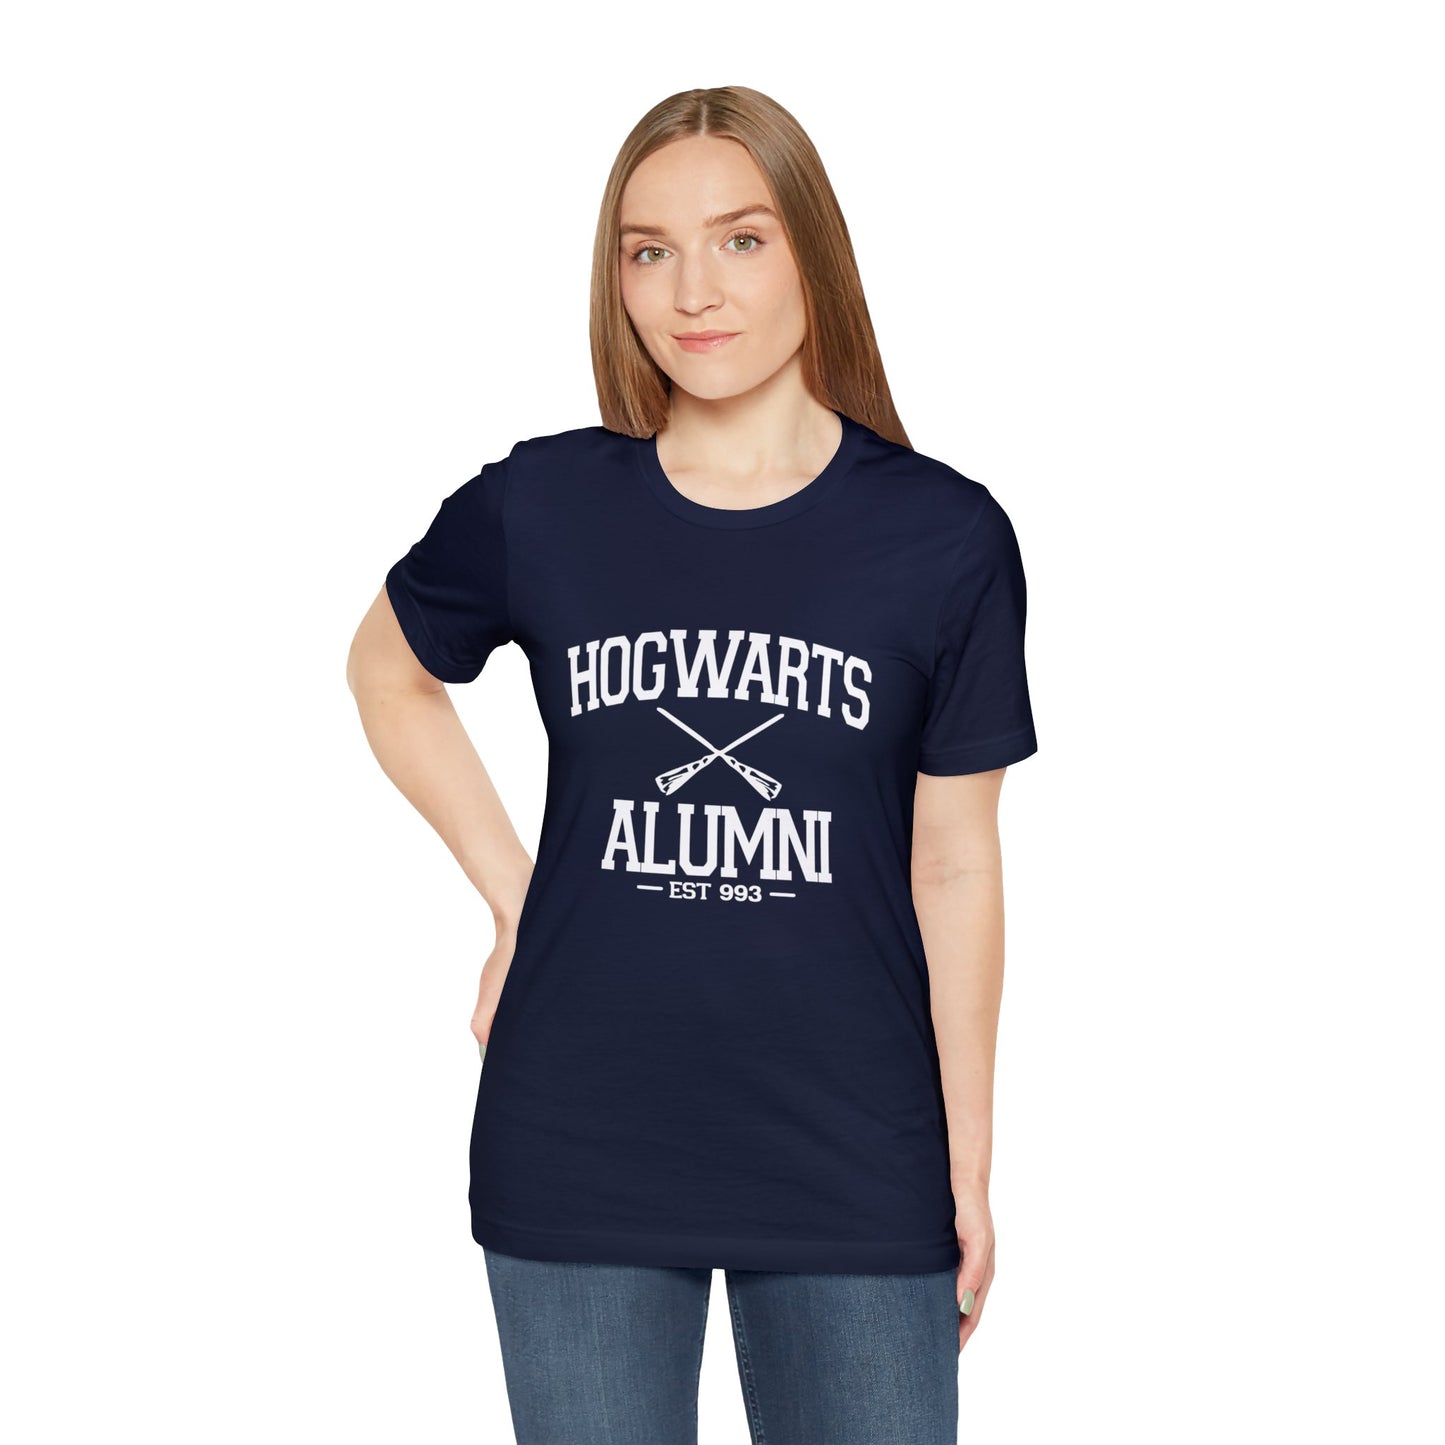 hogwarts alumni tshirt